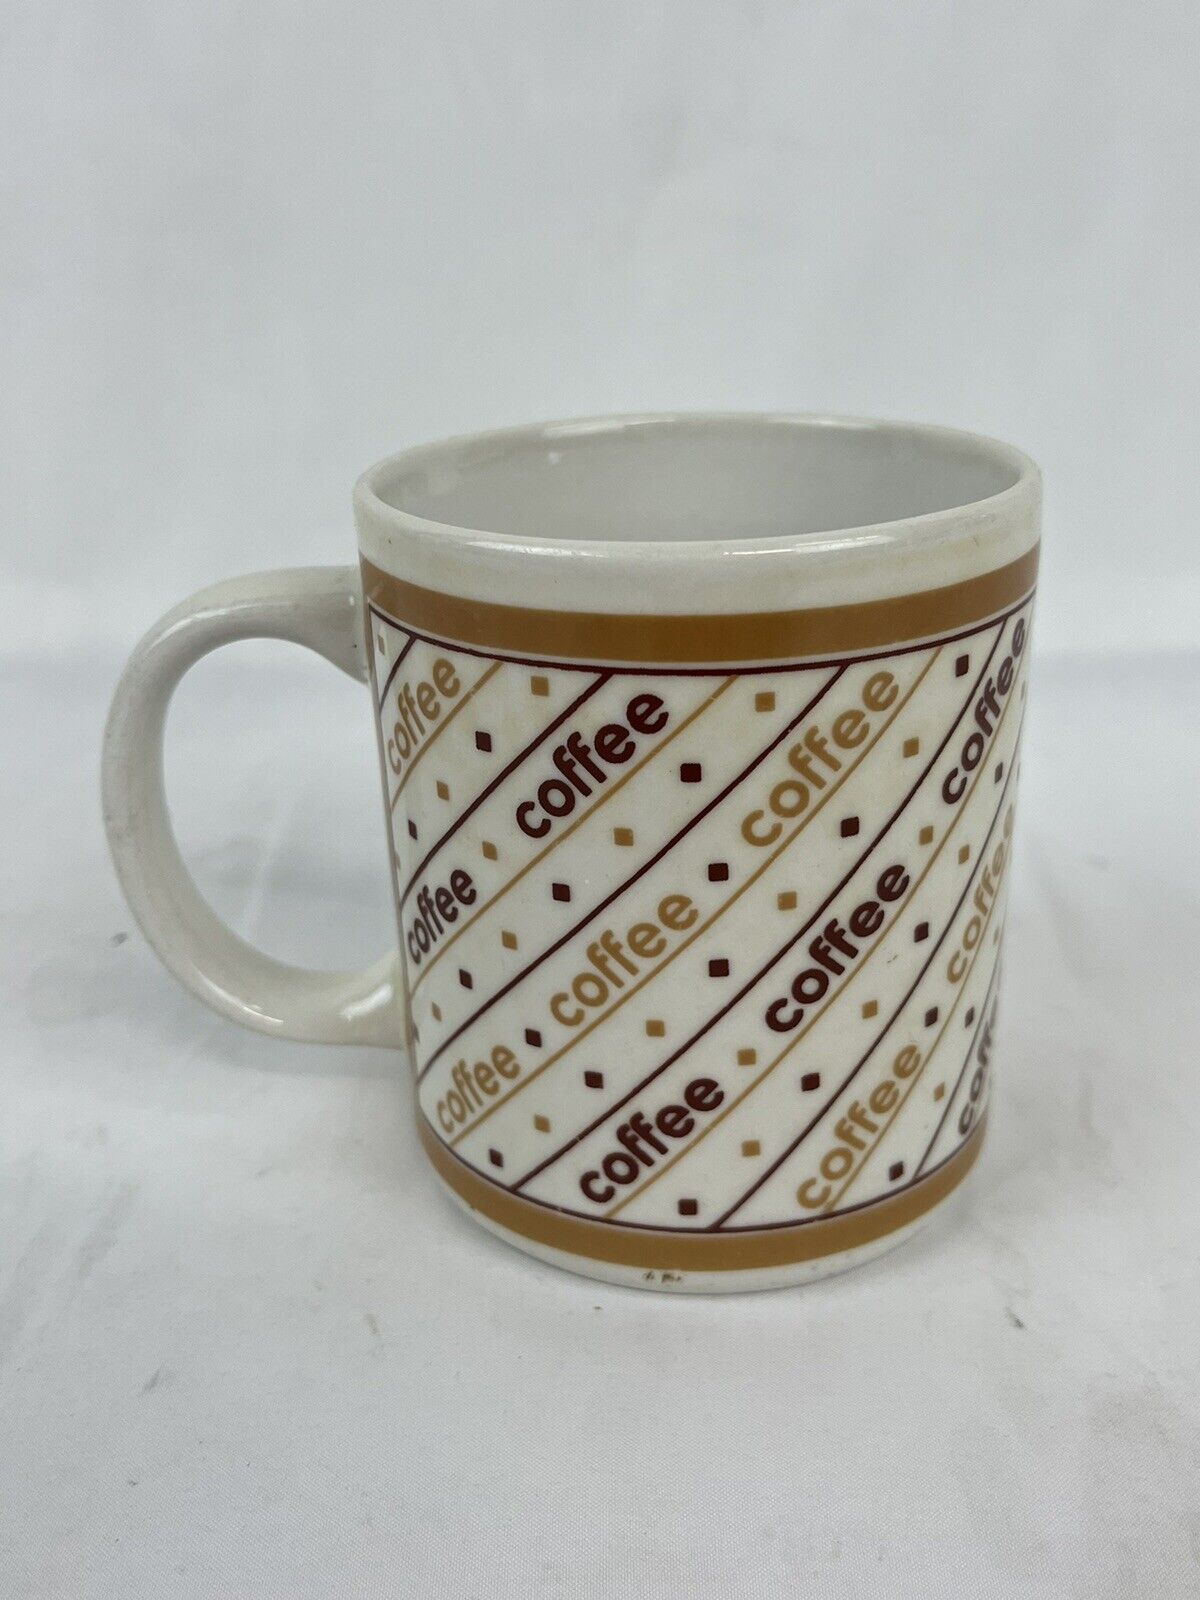 Finest Ceramics “Coffee” Coffee Mug Brown Tan Retro